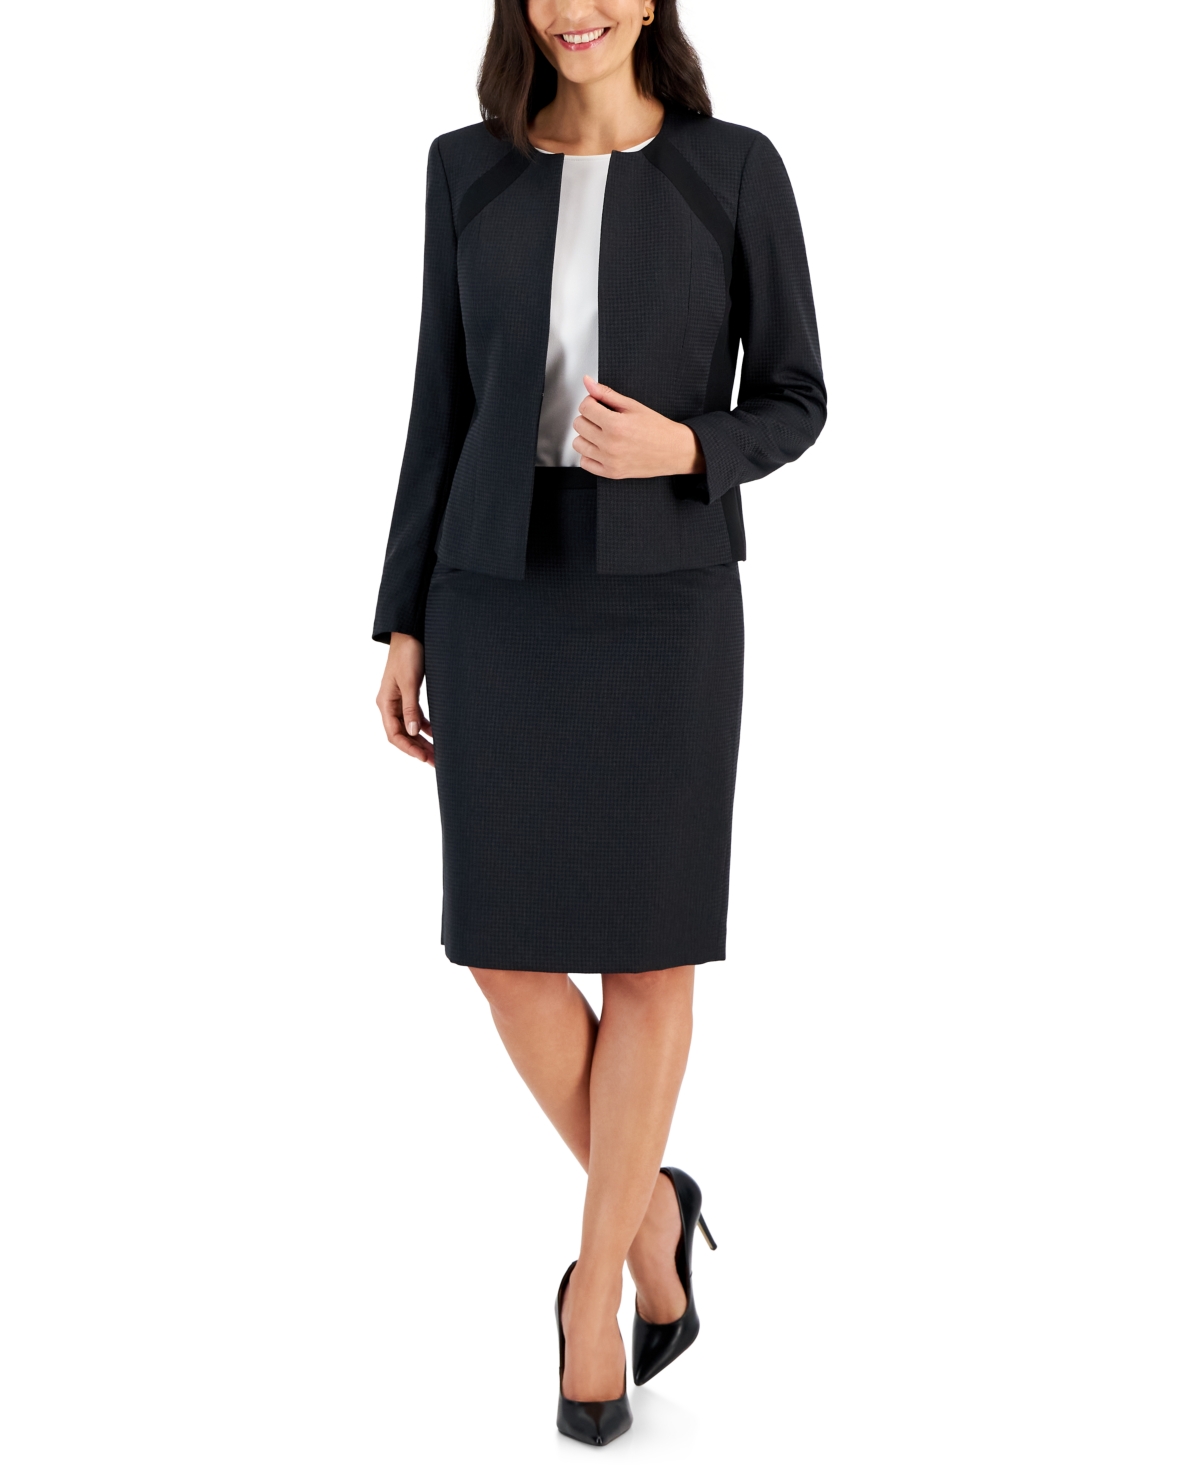 Women's Houndstooth Pencil Skirt Suit - Black